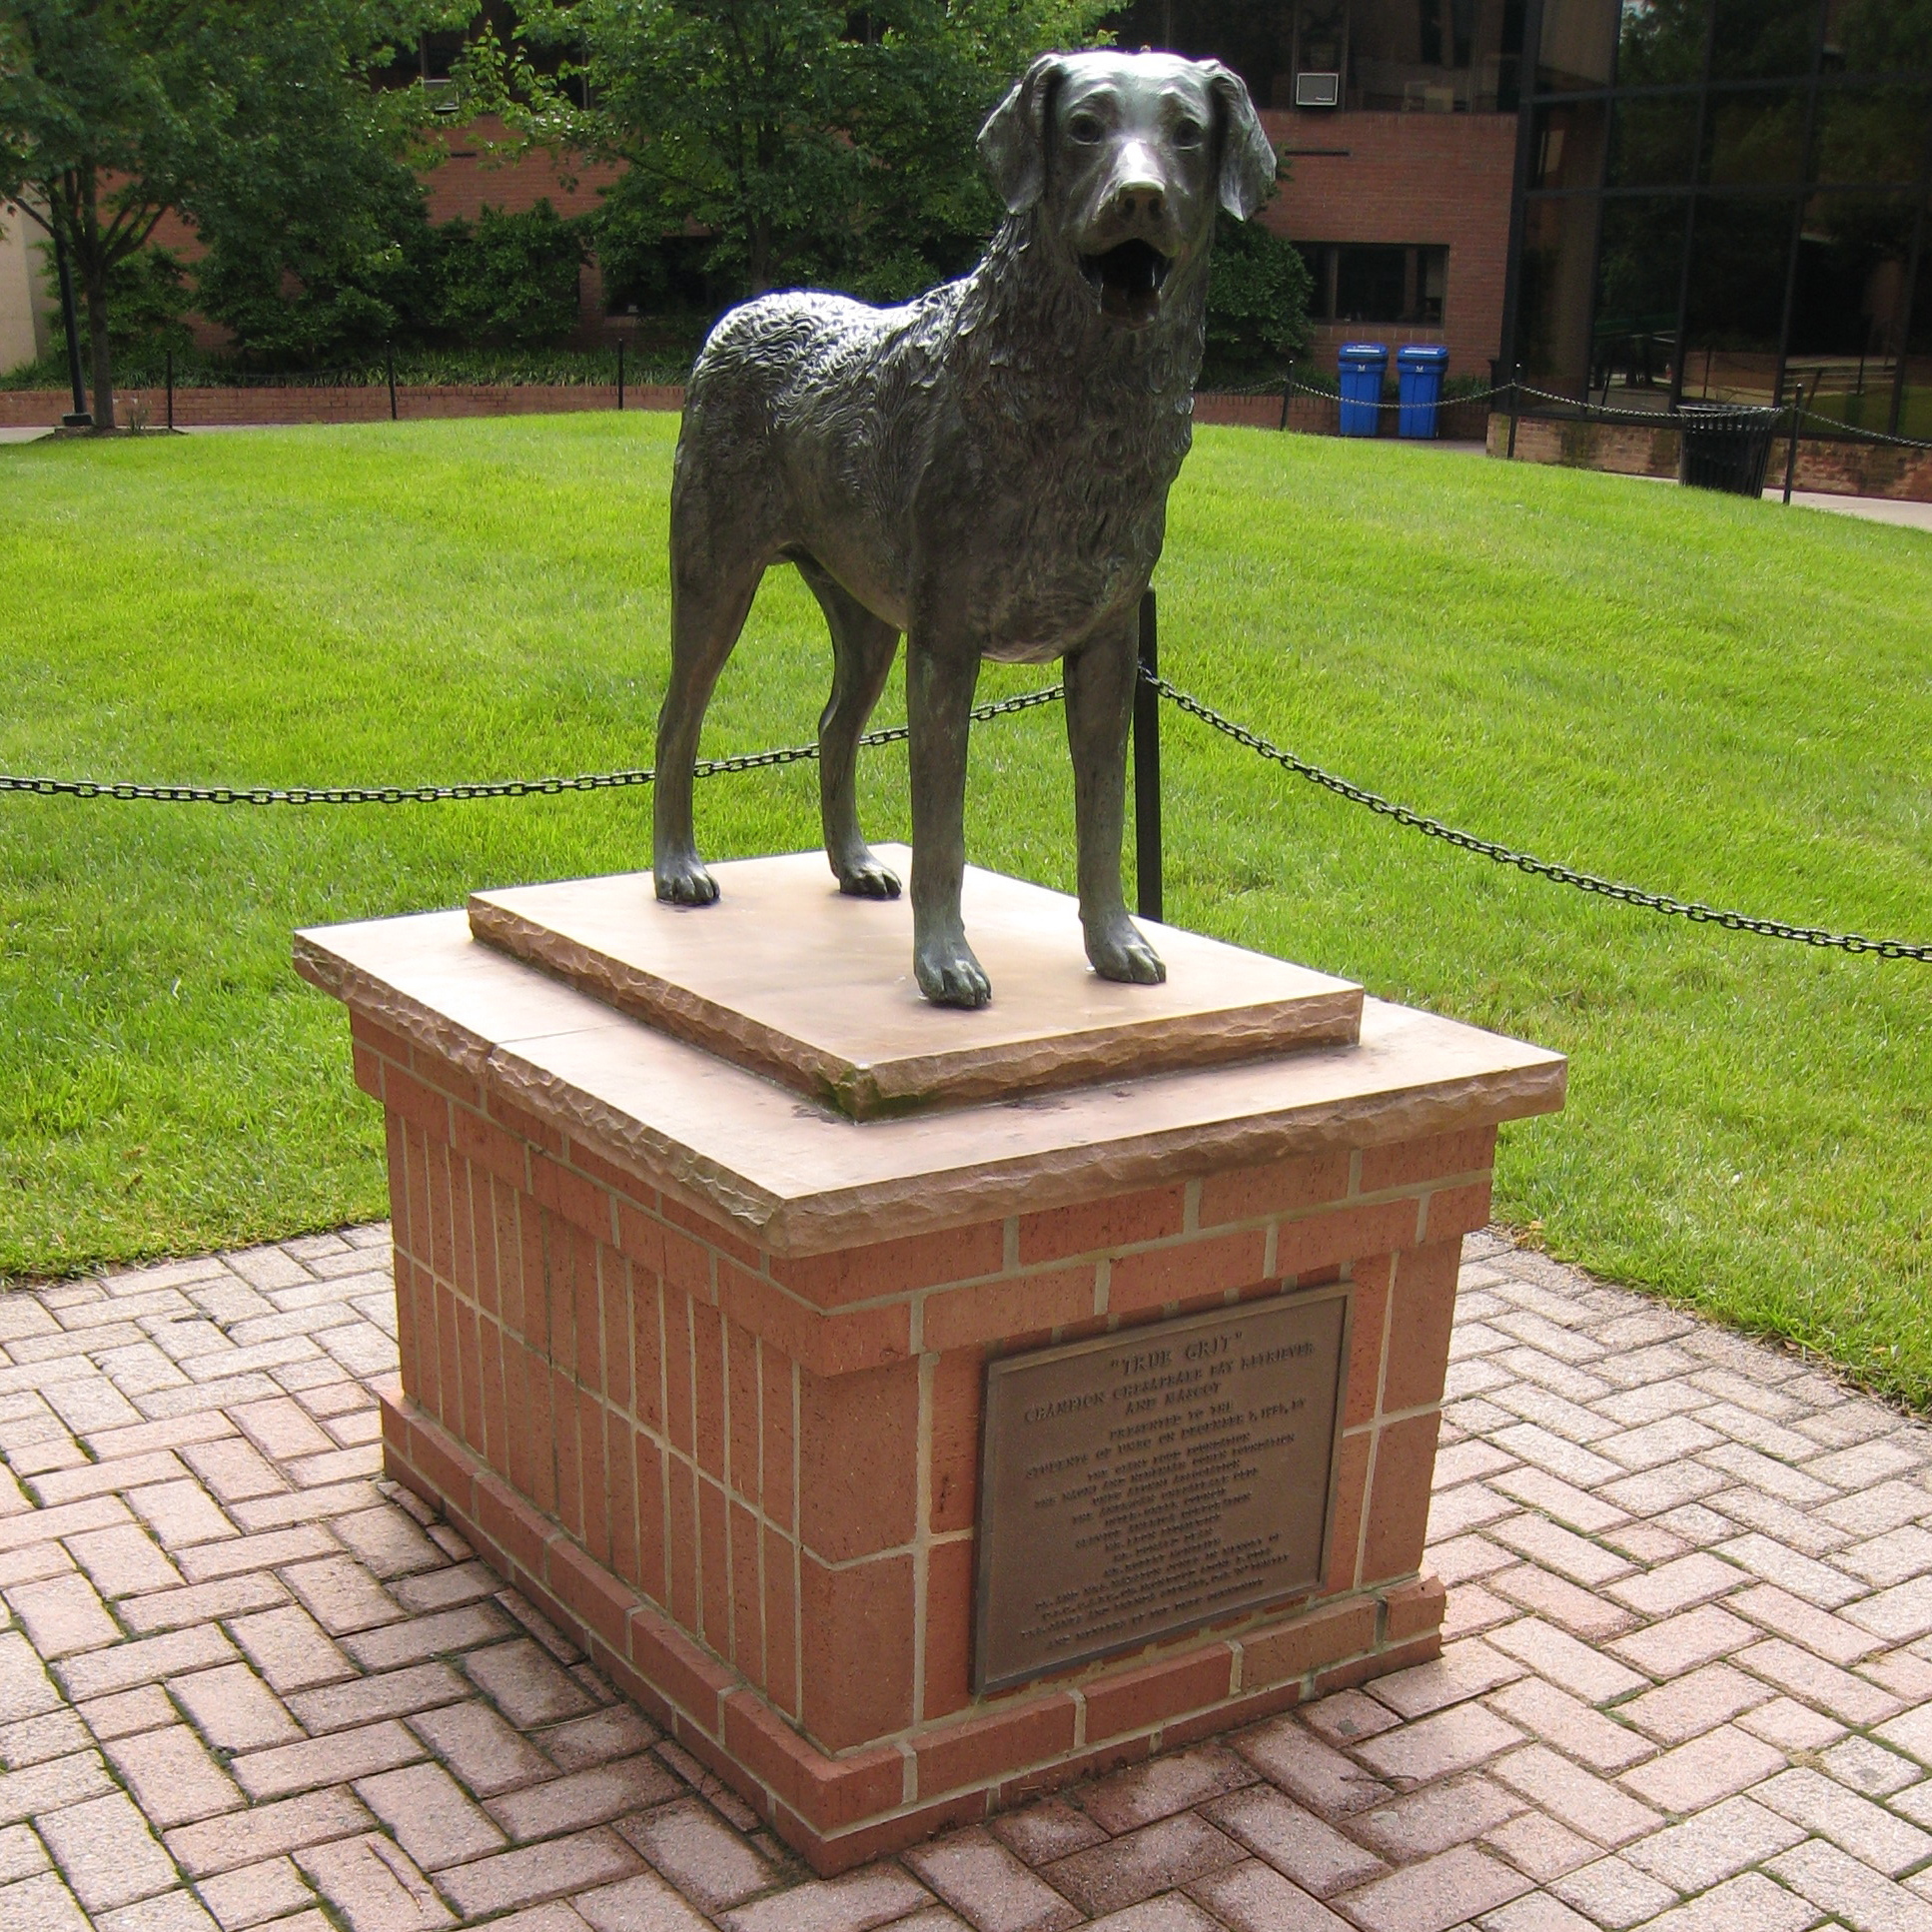 Statue of True Grit, UMBC's mascot. True Grit is a Chesapeake Bay Retriever. Source: https://en.m.wikipedia.org/wiki/File:UMBC_Mascot.jpg